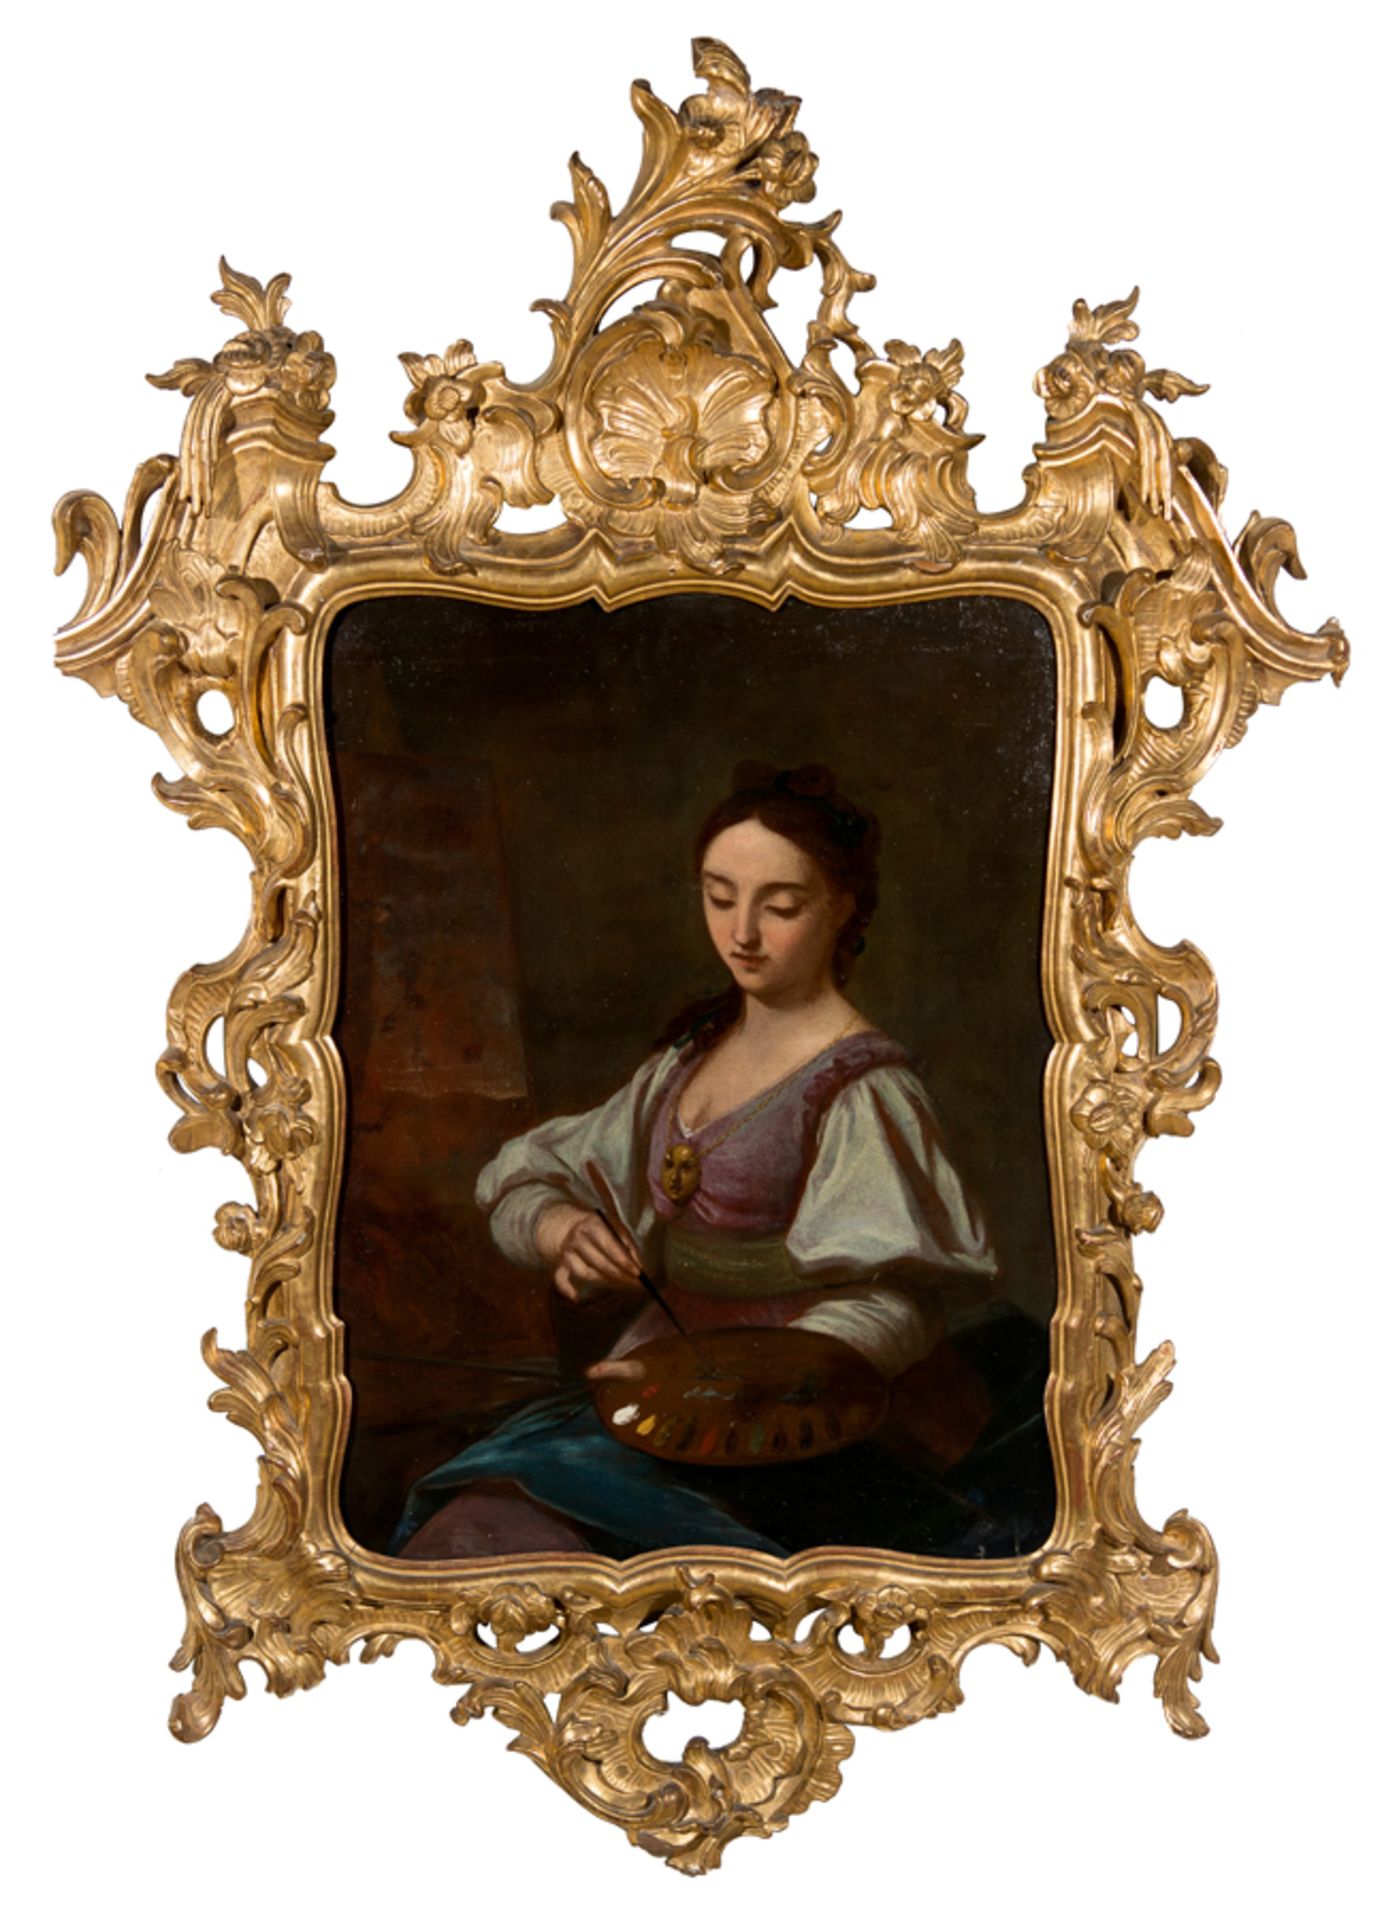 Attributed to Maria Luisa Raggi (Genoa, Italy, 1742 - 1813)